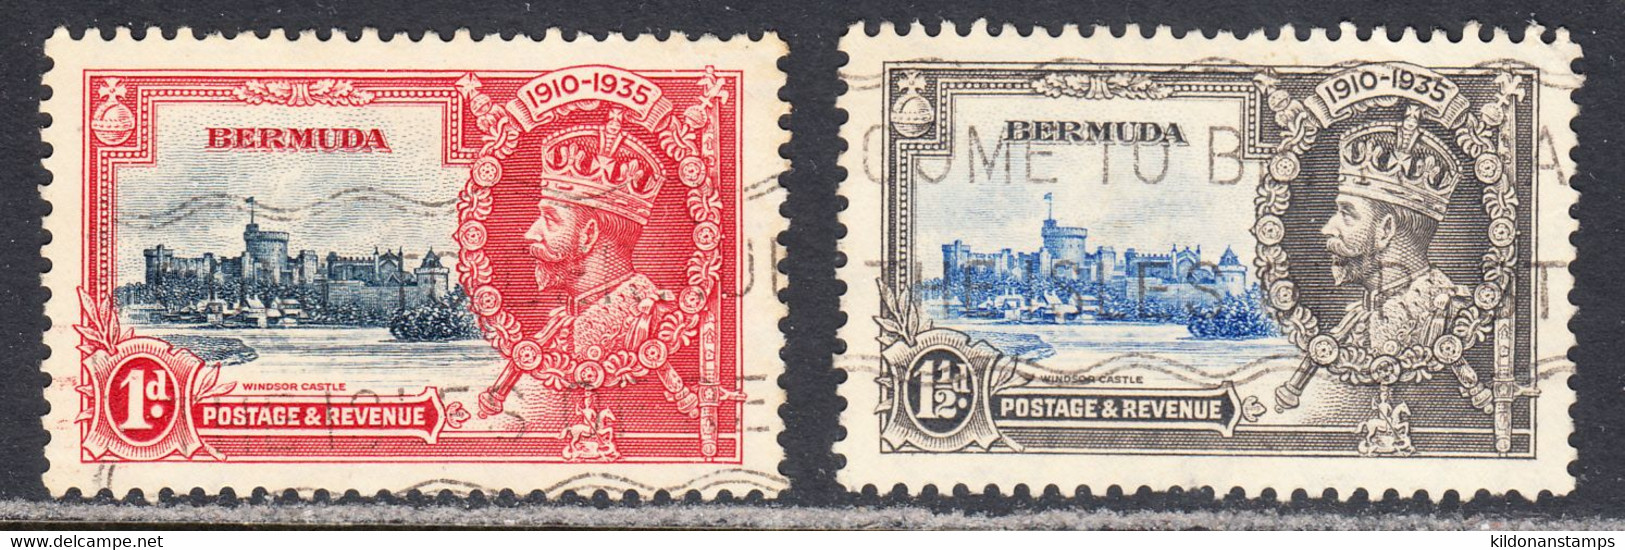 Bermuda 1935 Silver Jubilee, Cancelled, SG 94-95 - Bermuda